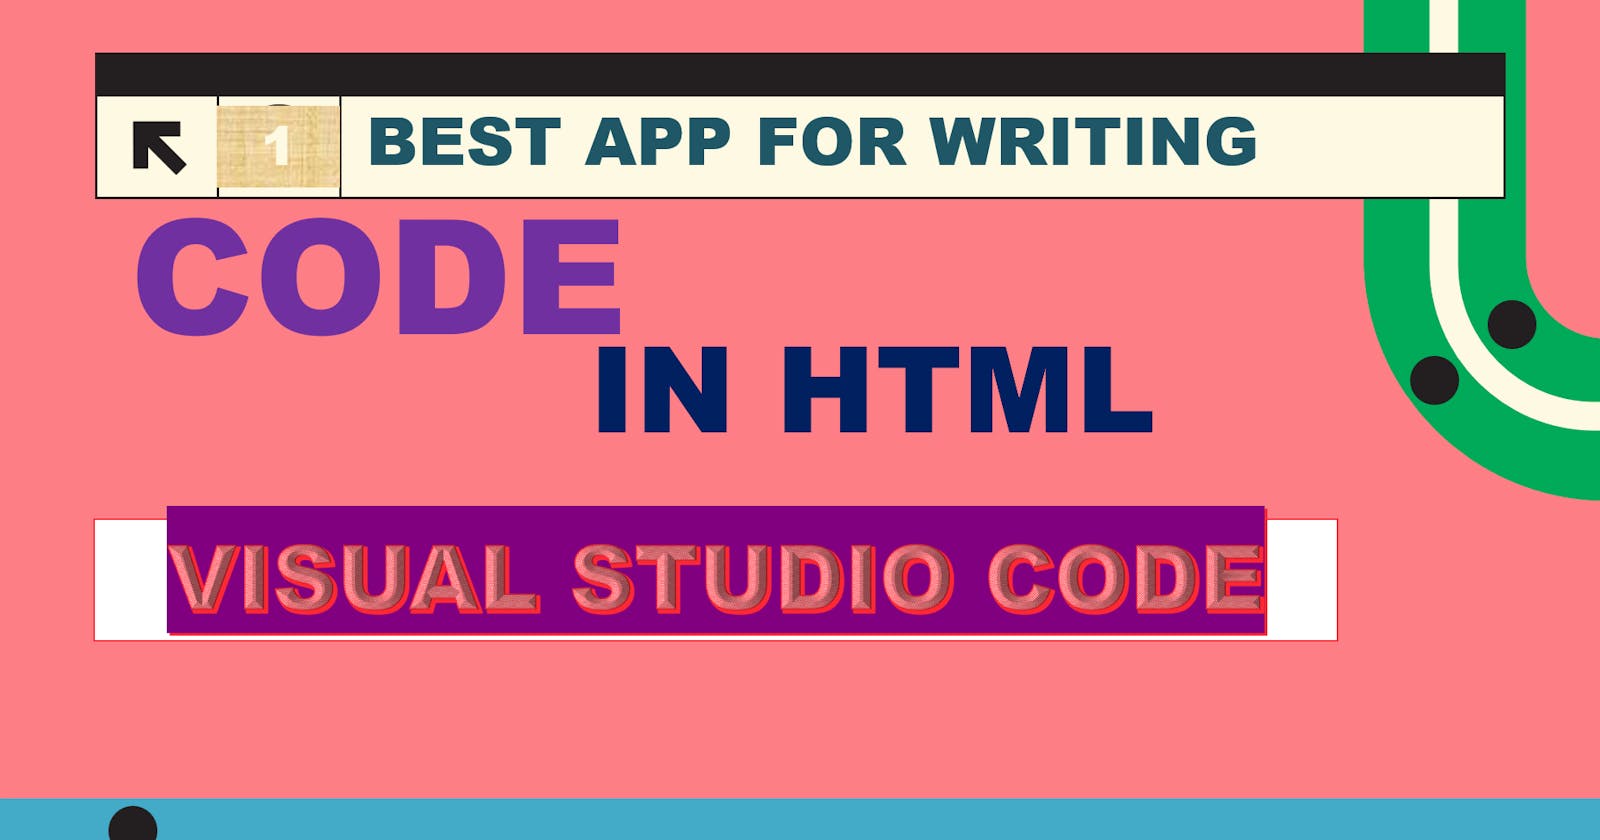 Best app for writing CODE